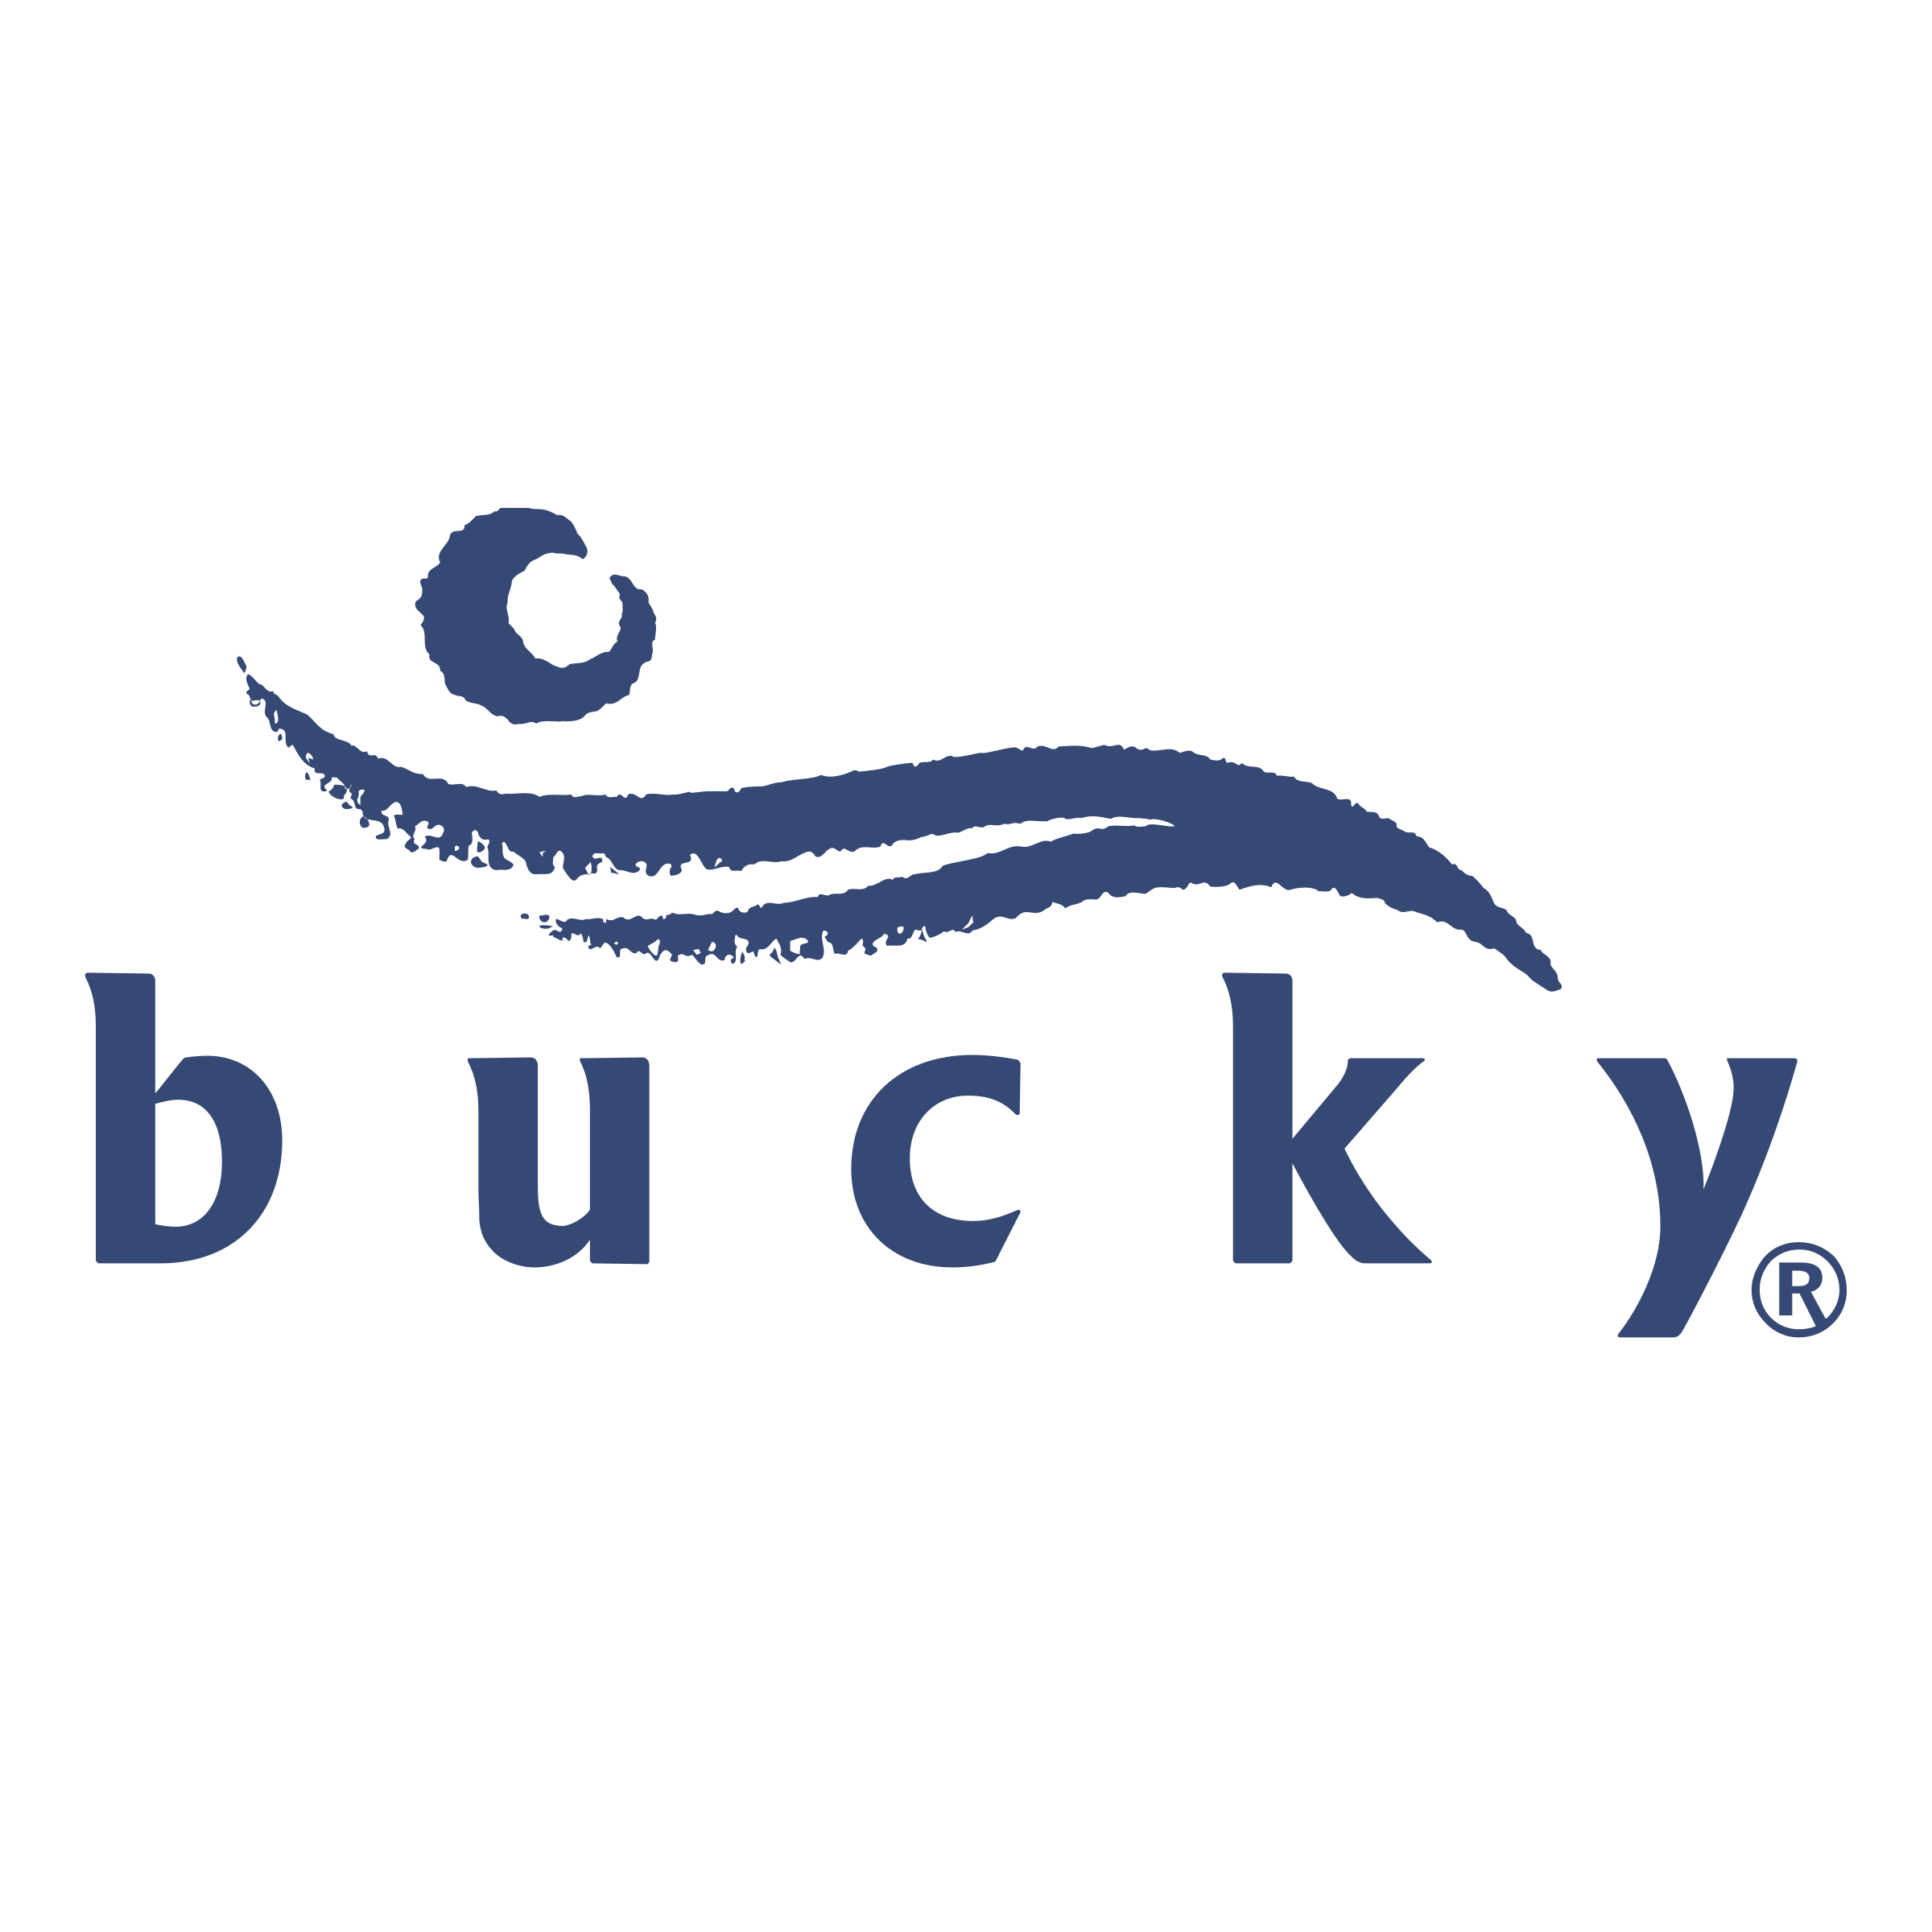 Bucky Logo - Bucky Logo PNG Transparent & SVG Vector - Freebie Supply